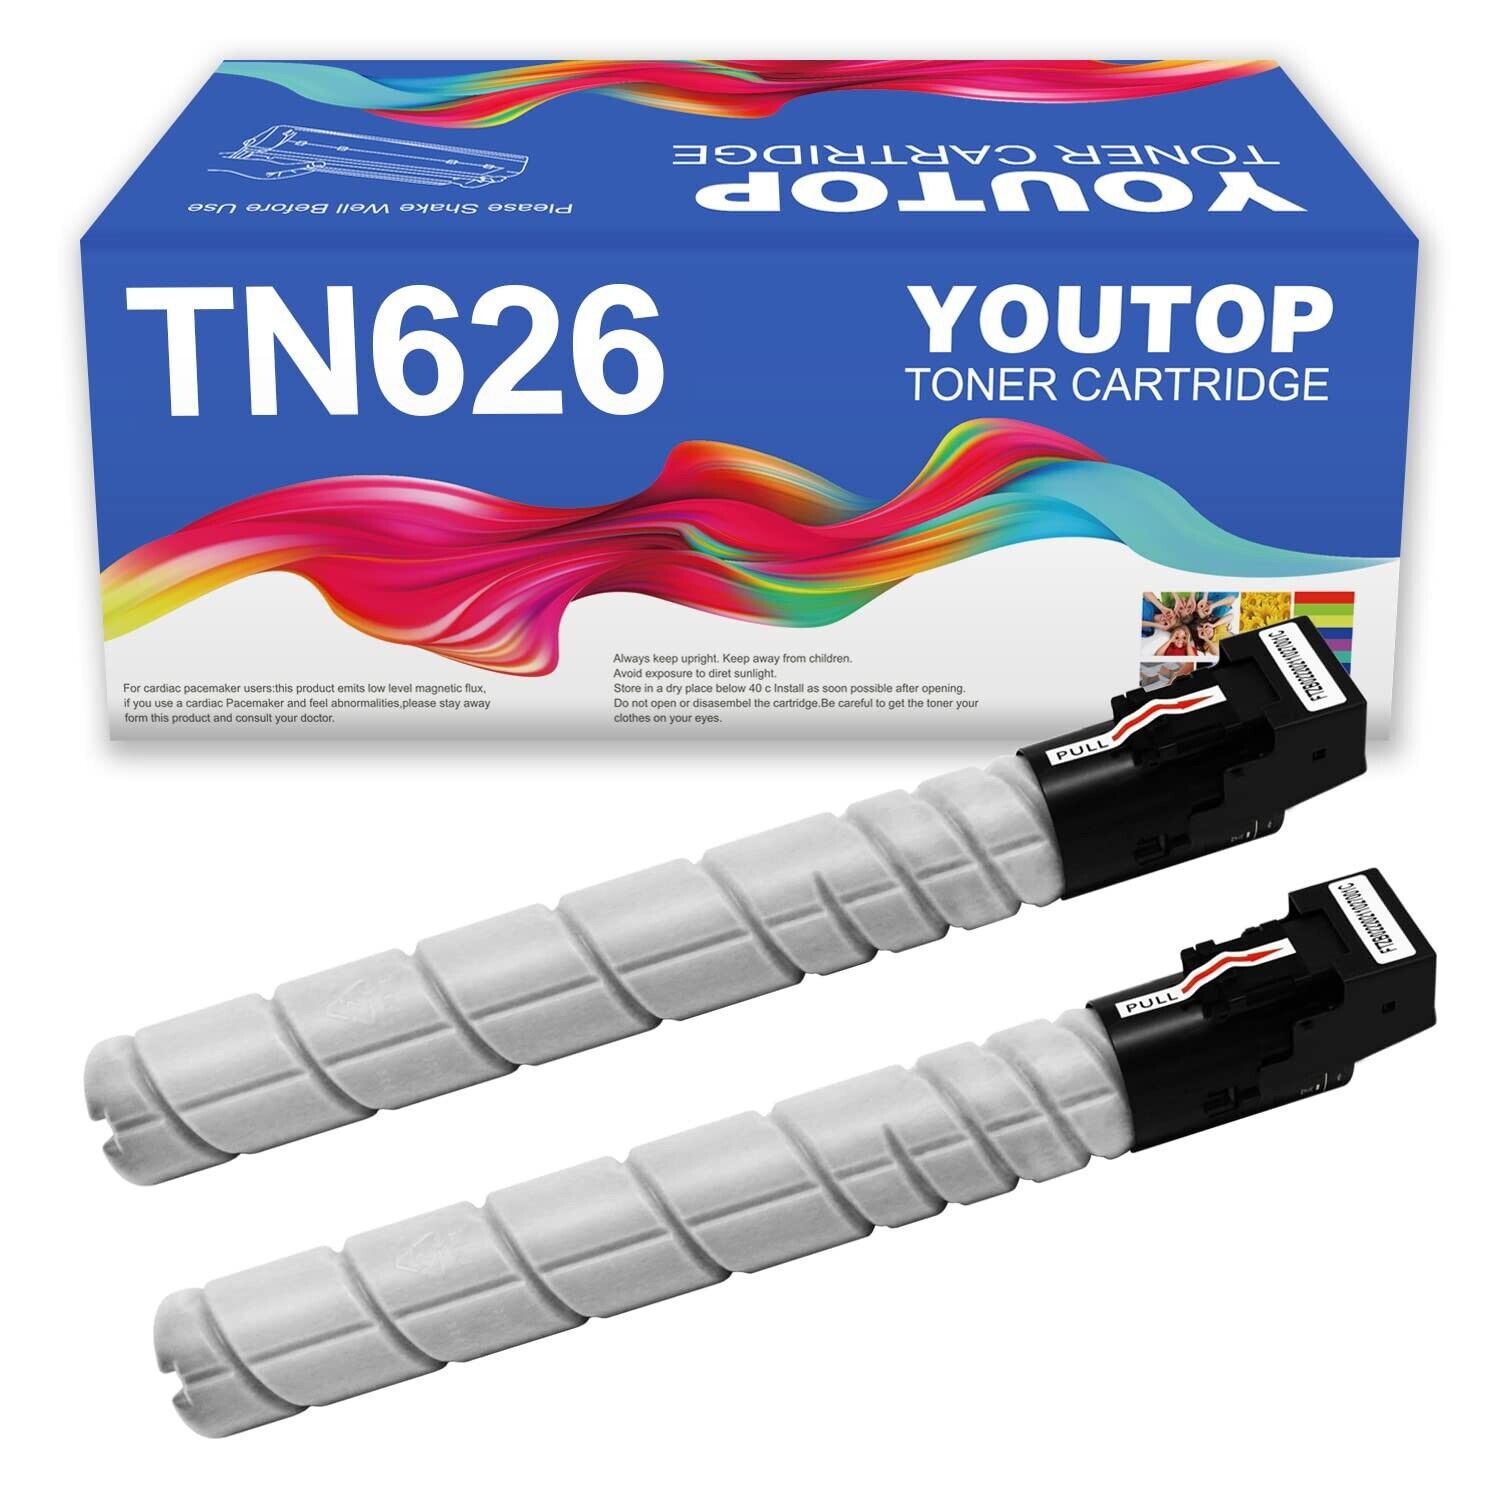 Youtop Konica Minolta TN-626K Toner Cartridge - Black 2 Pack